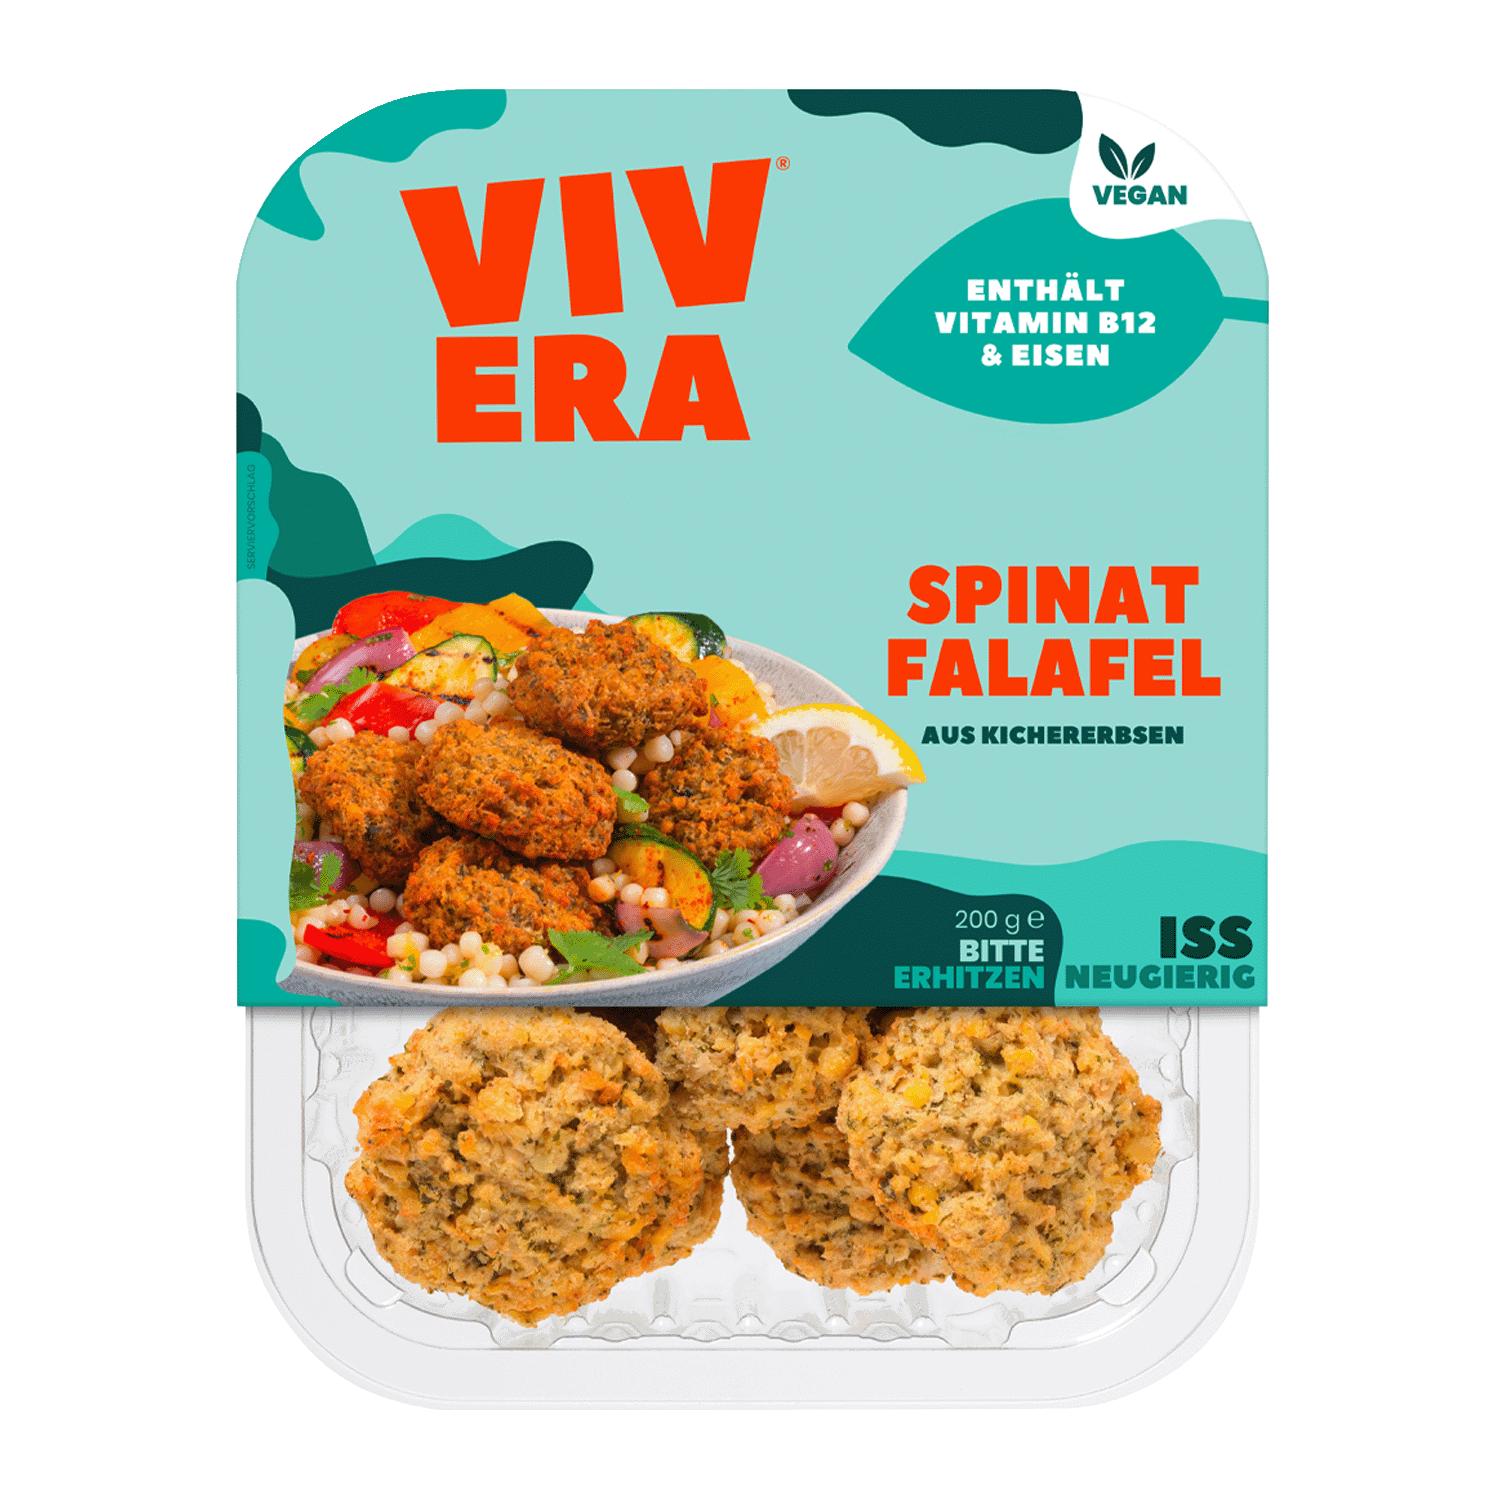 Vegan Spinach Falafel, 200g